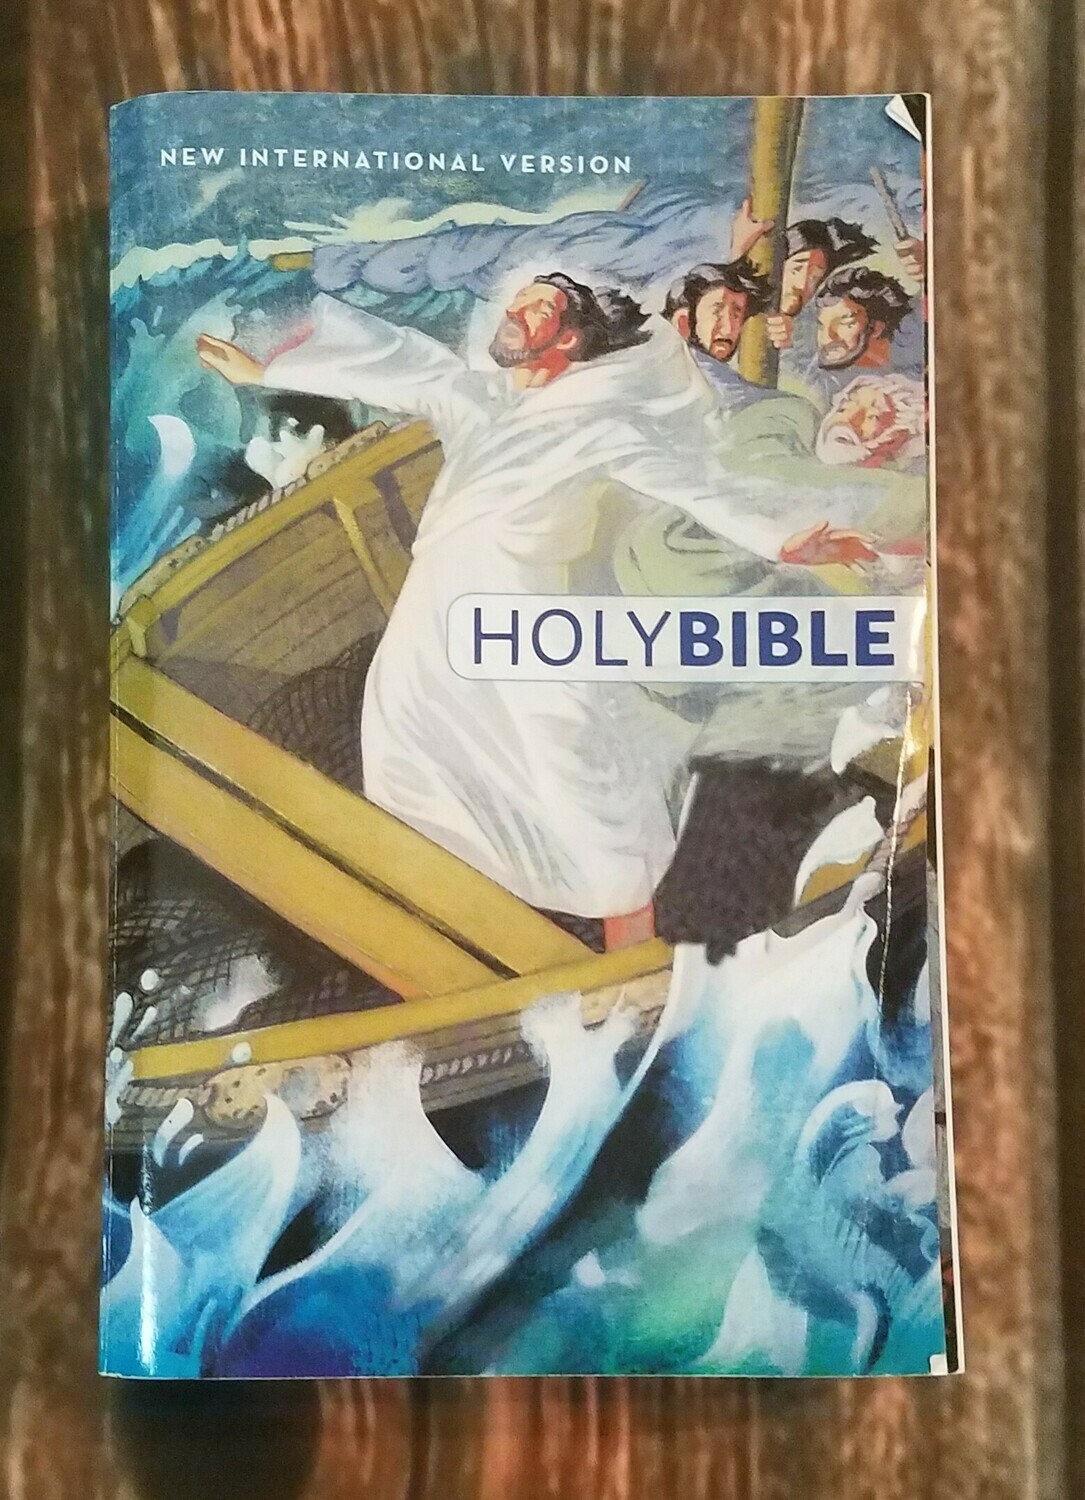 NIV Children's Holy Bible - Paperback Edition